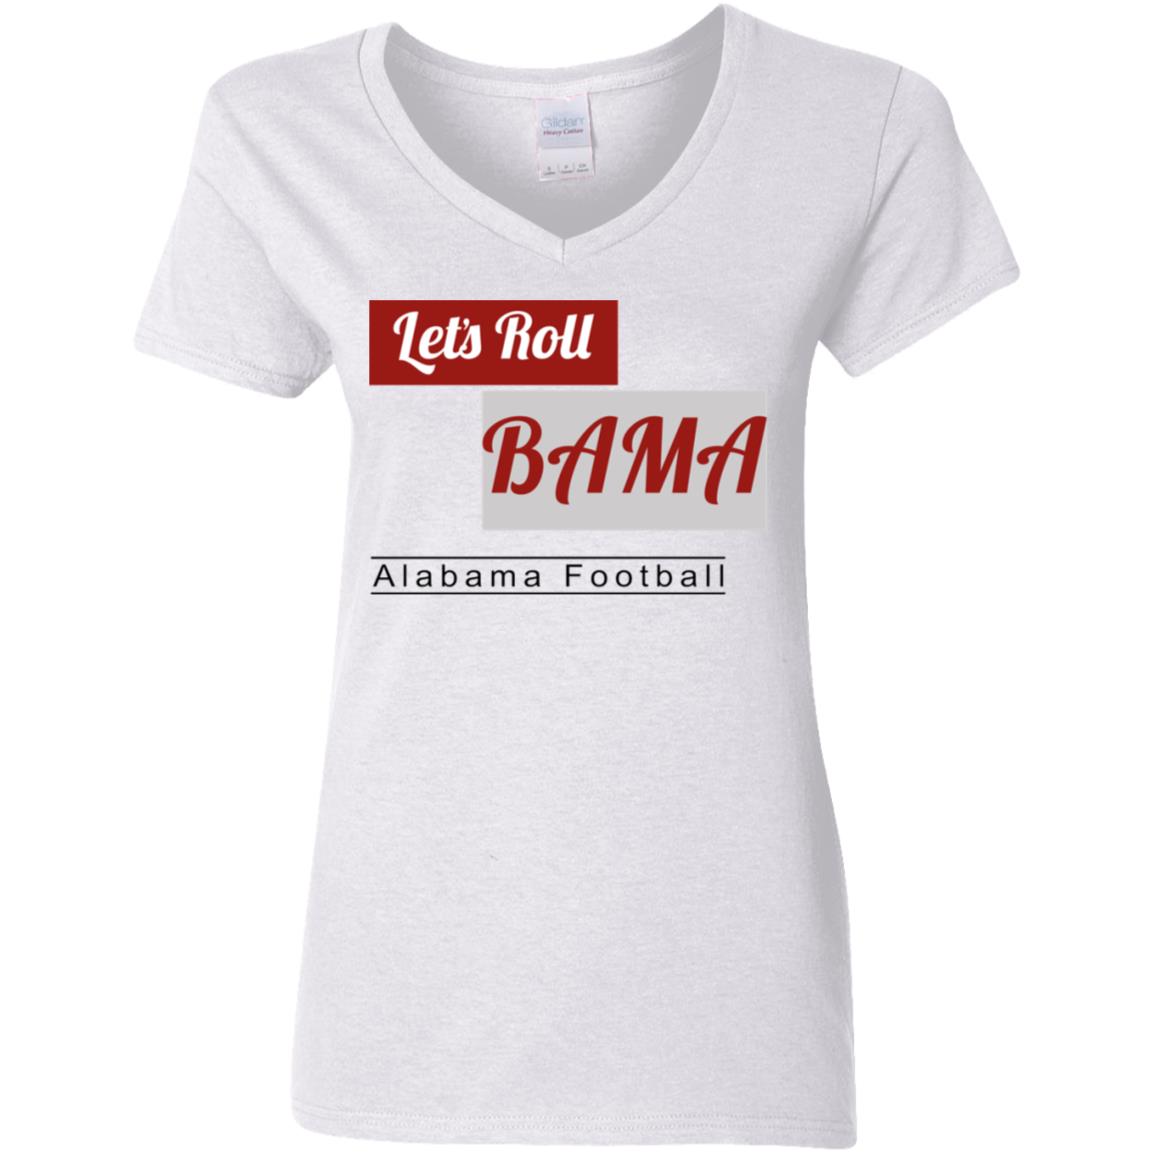 Let's Roll Bama Ladies' V-Neck T-Shirt